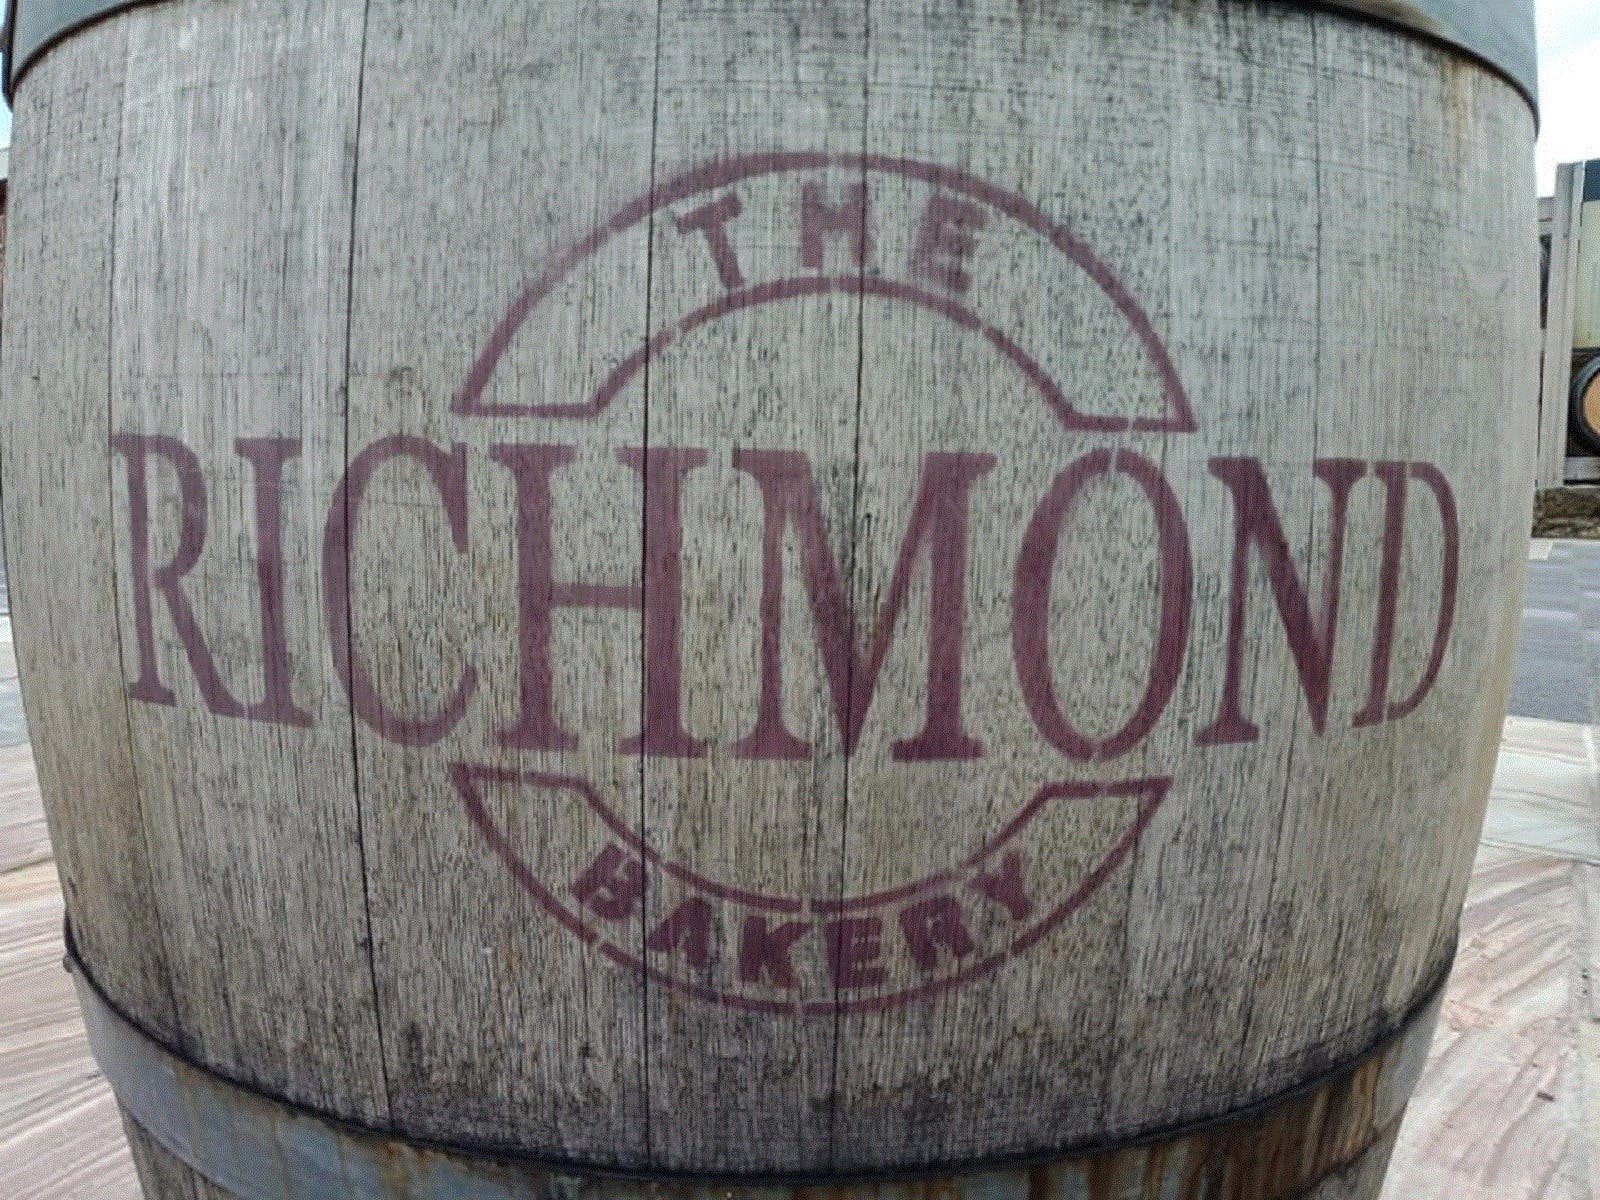 The Richmond Bakery